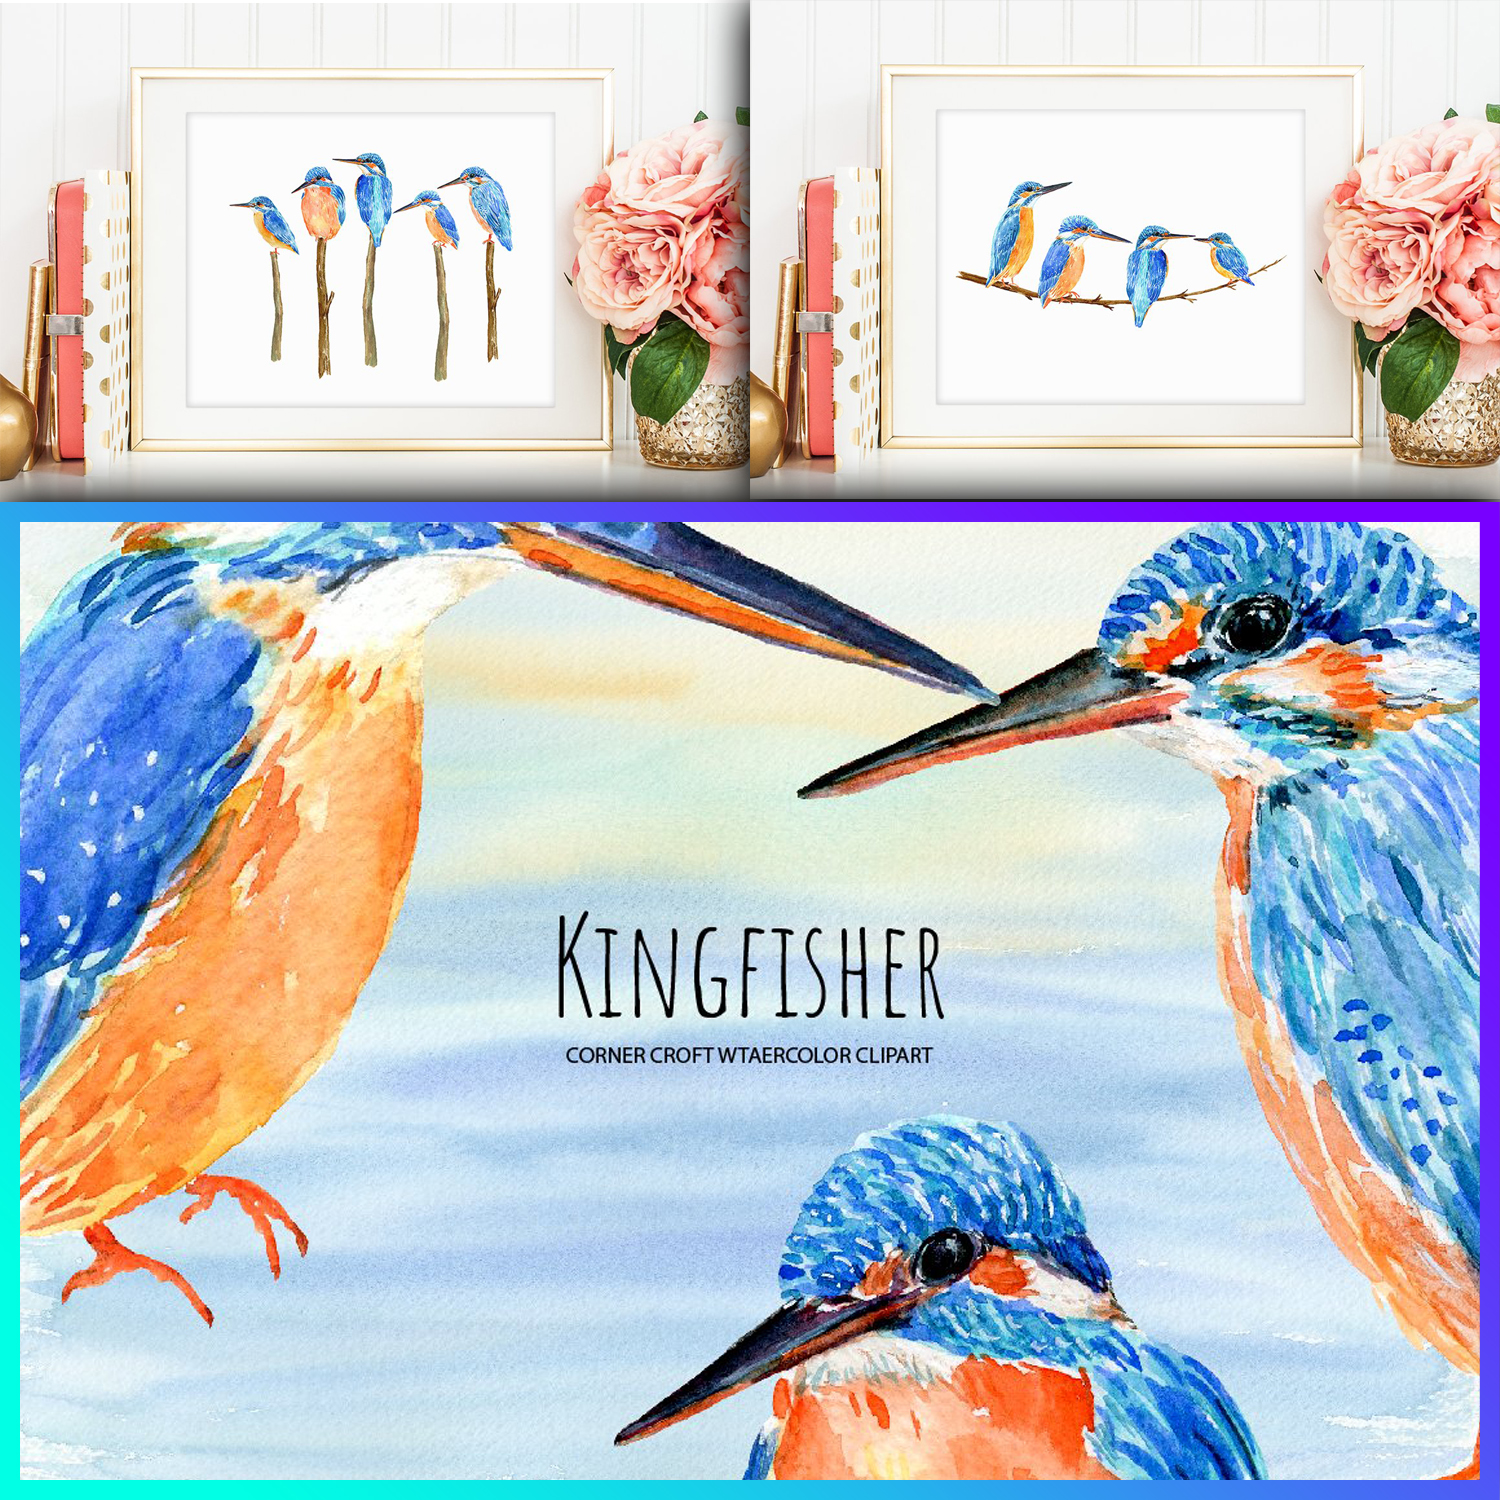 Images with bird kingfisher illustration.